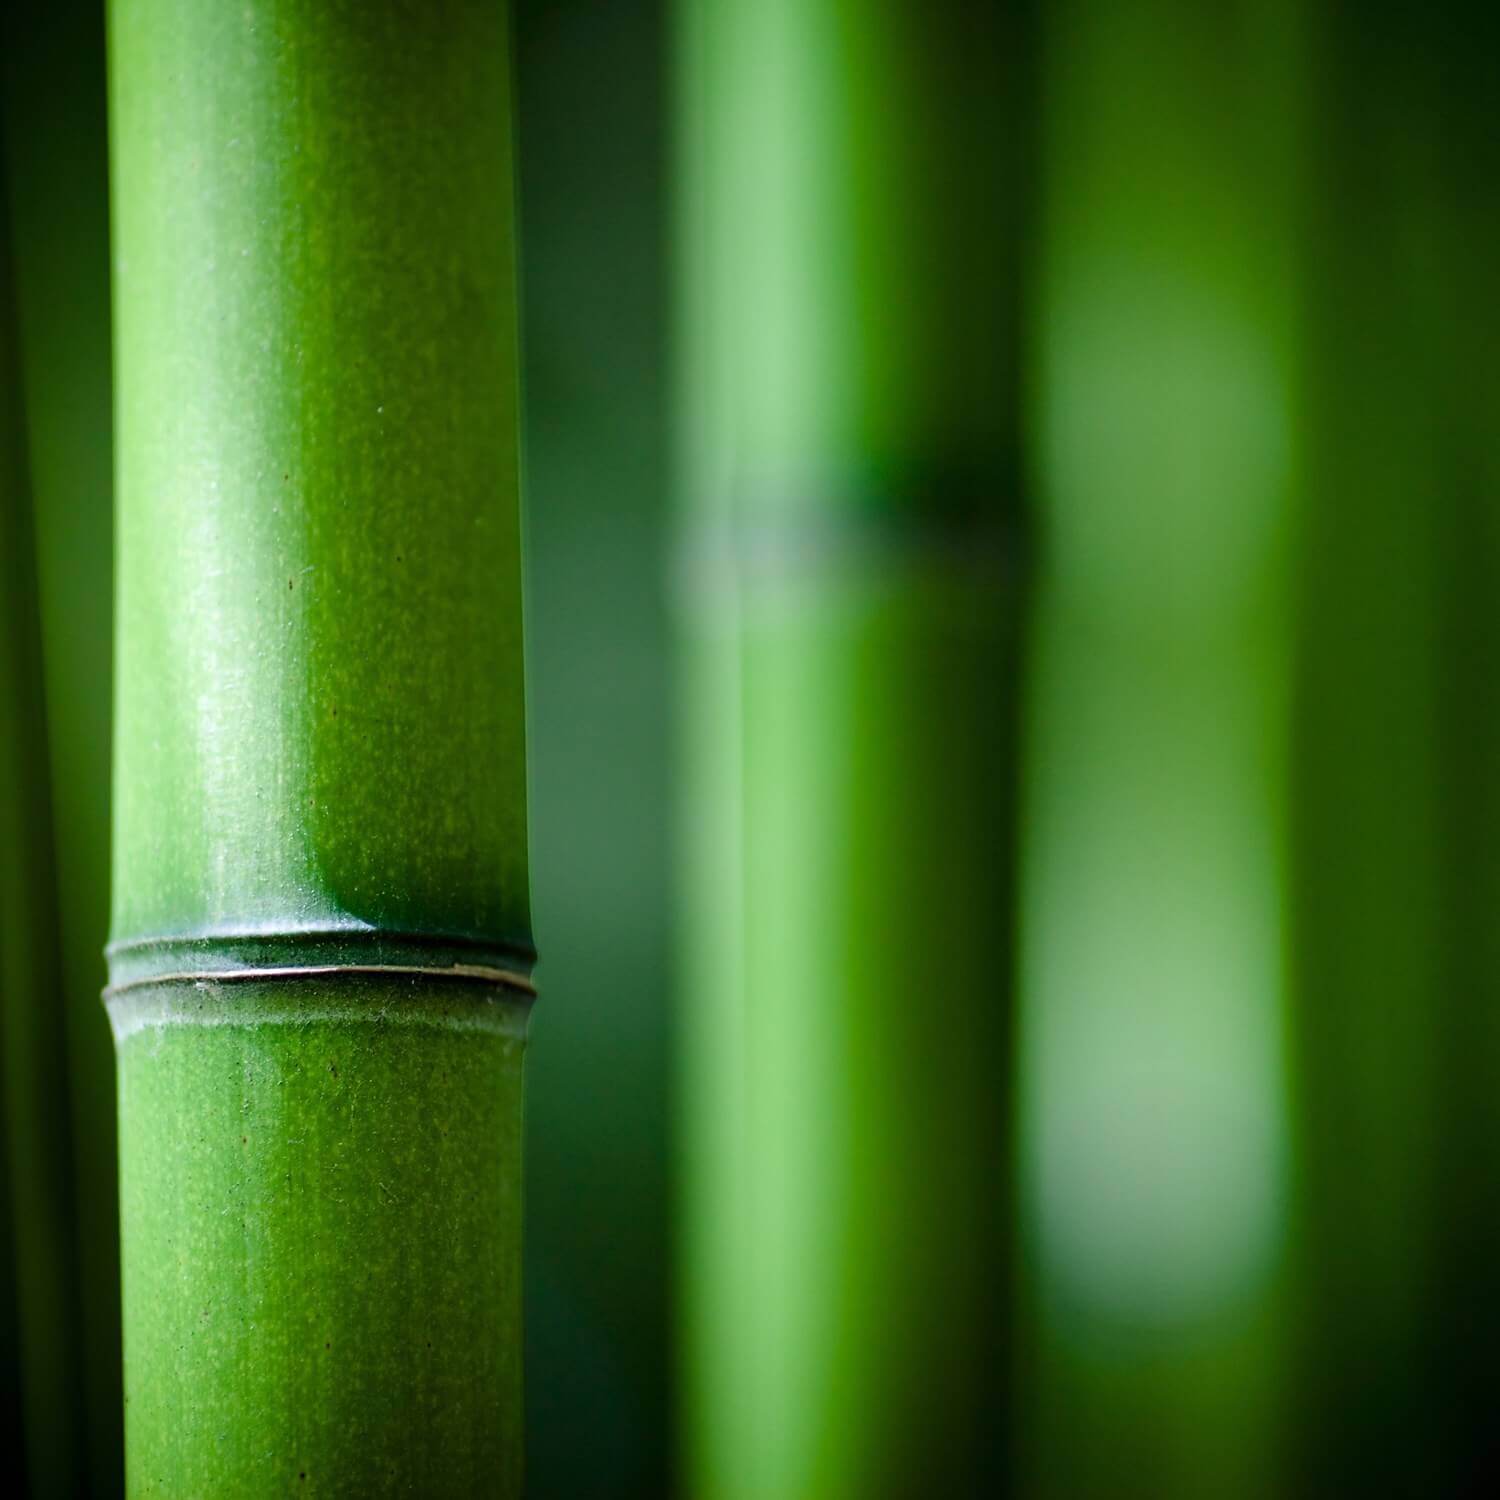 In Arashiyama, bamboo forests are carefully managed by craftsmen = Shutterstock